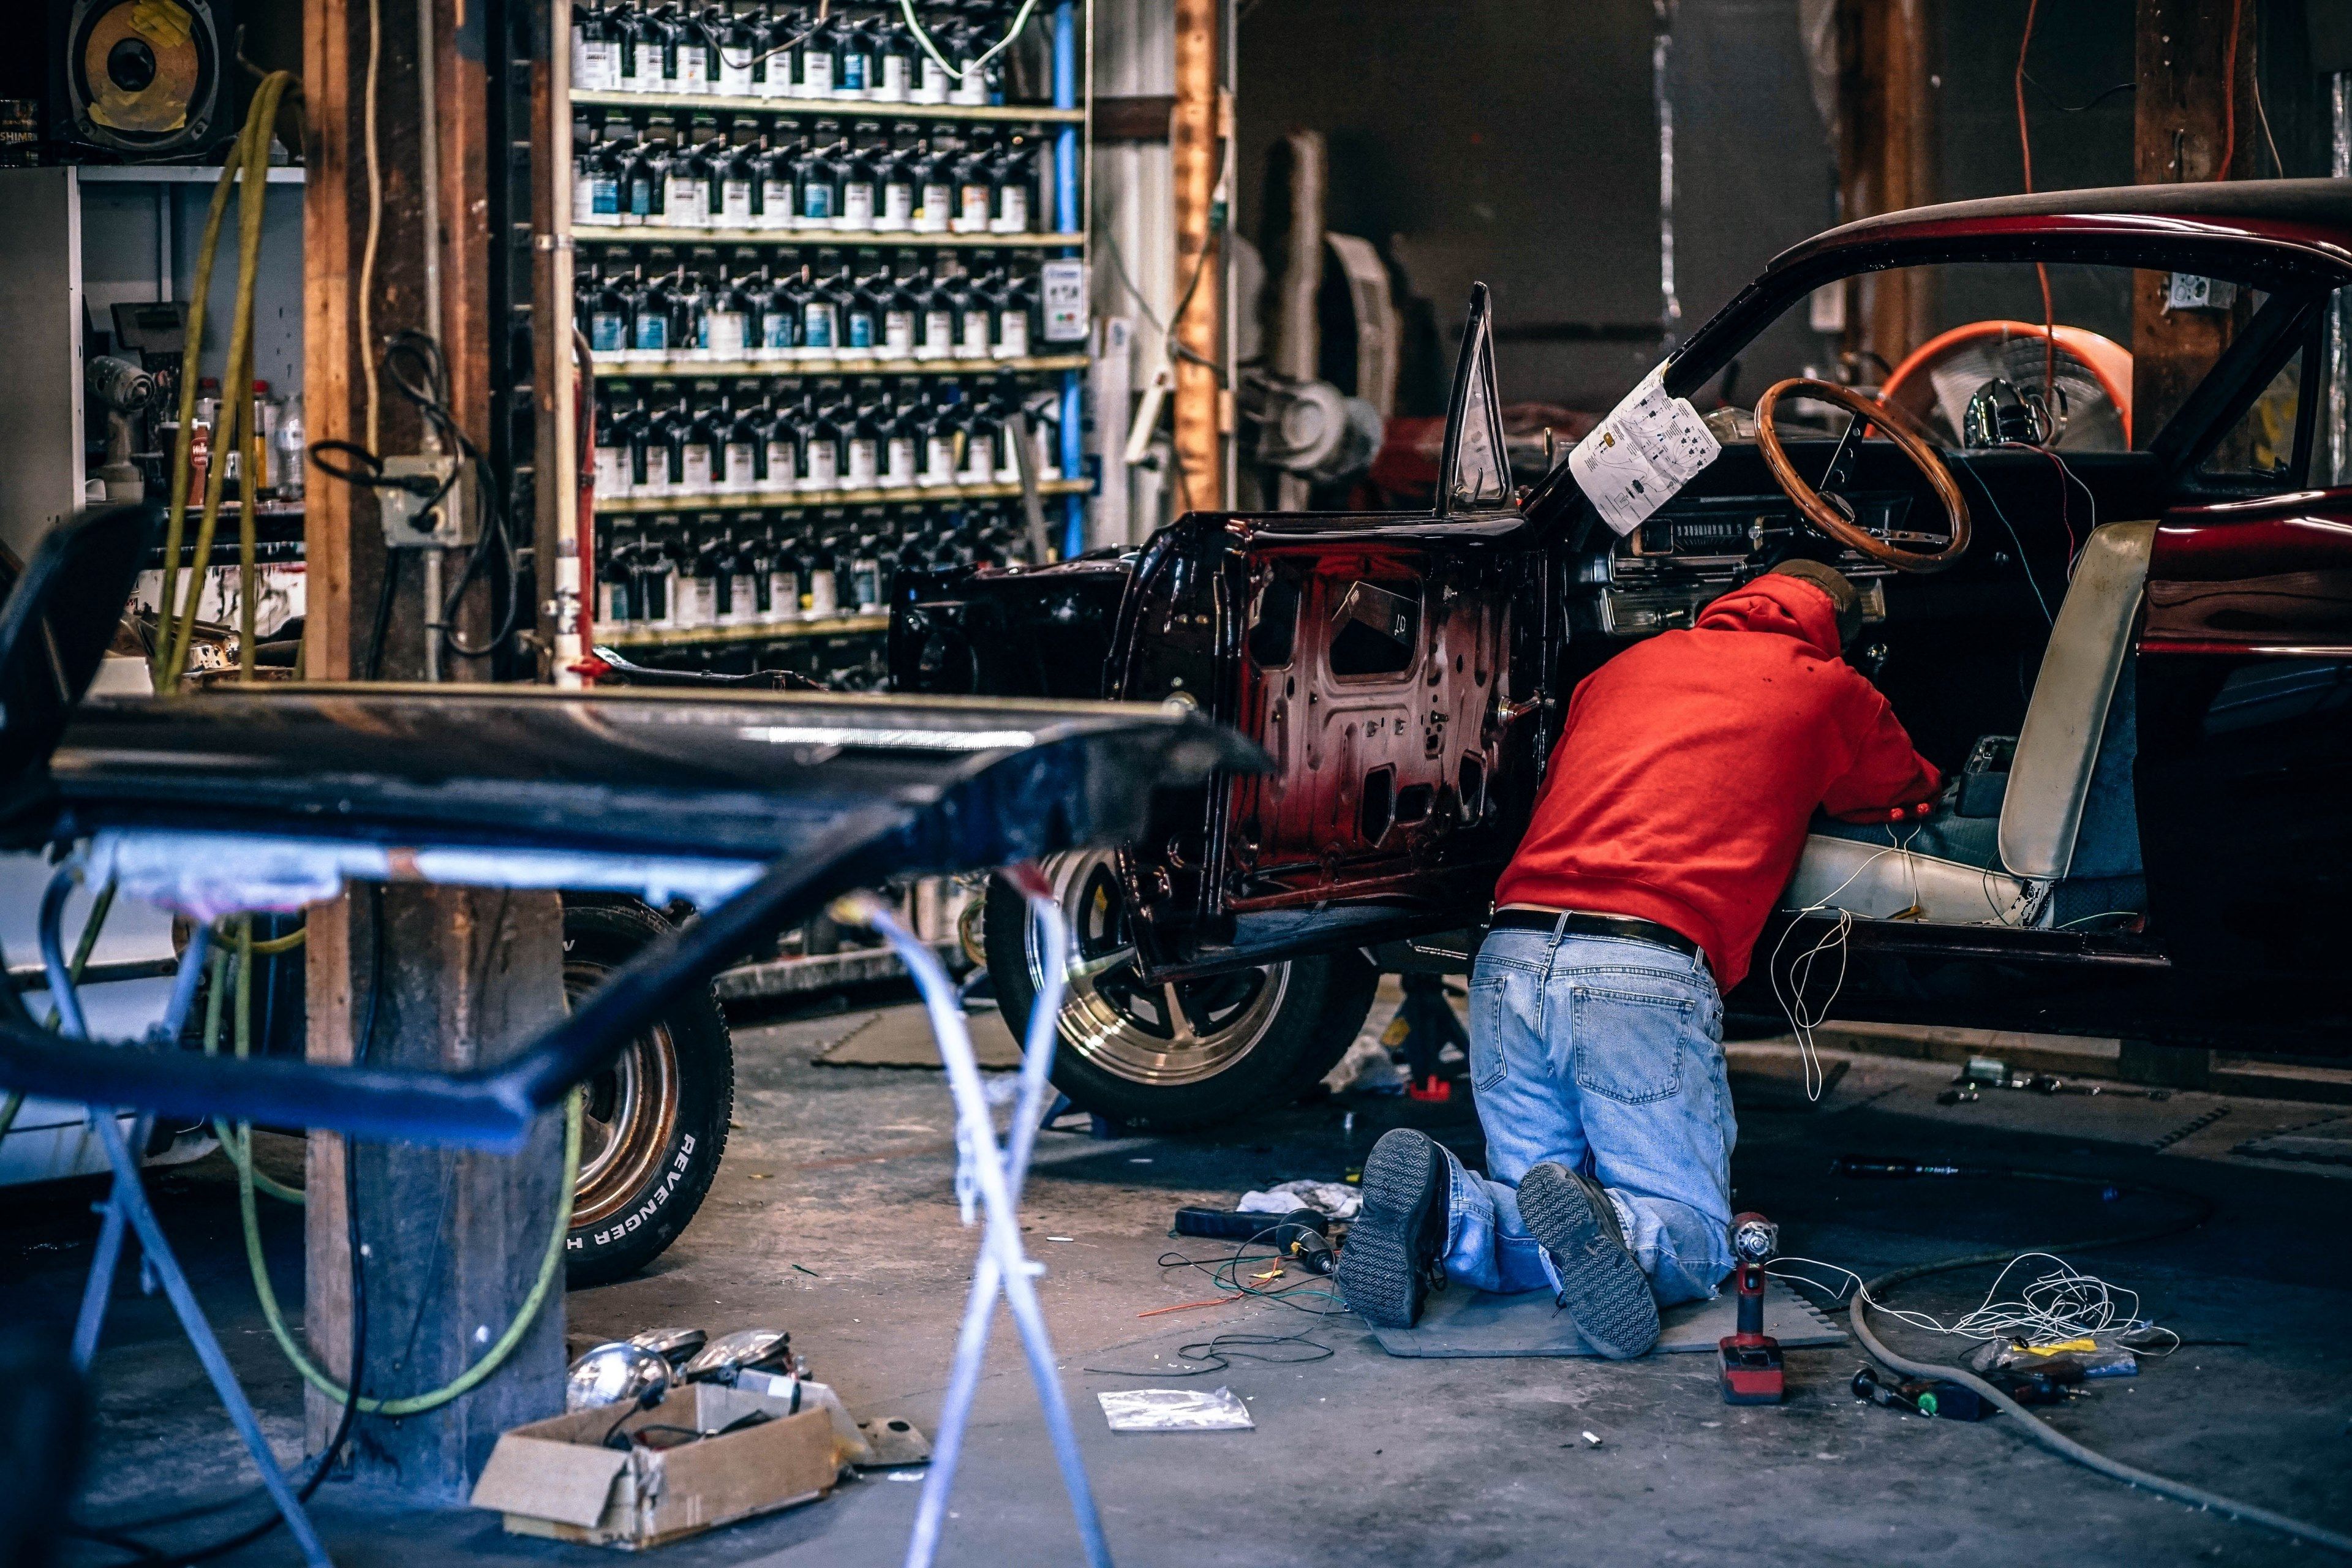 Wallpaper / a car mechanic working on an old car in a workshop, car restoration workshop 4k wallpaper free download